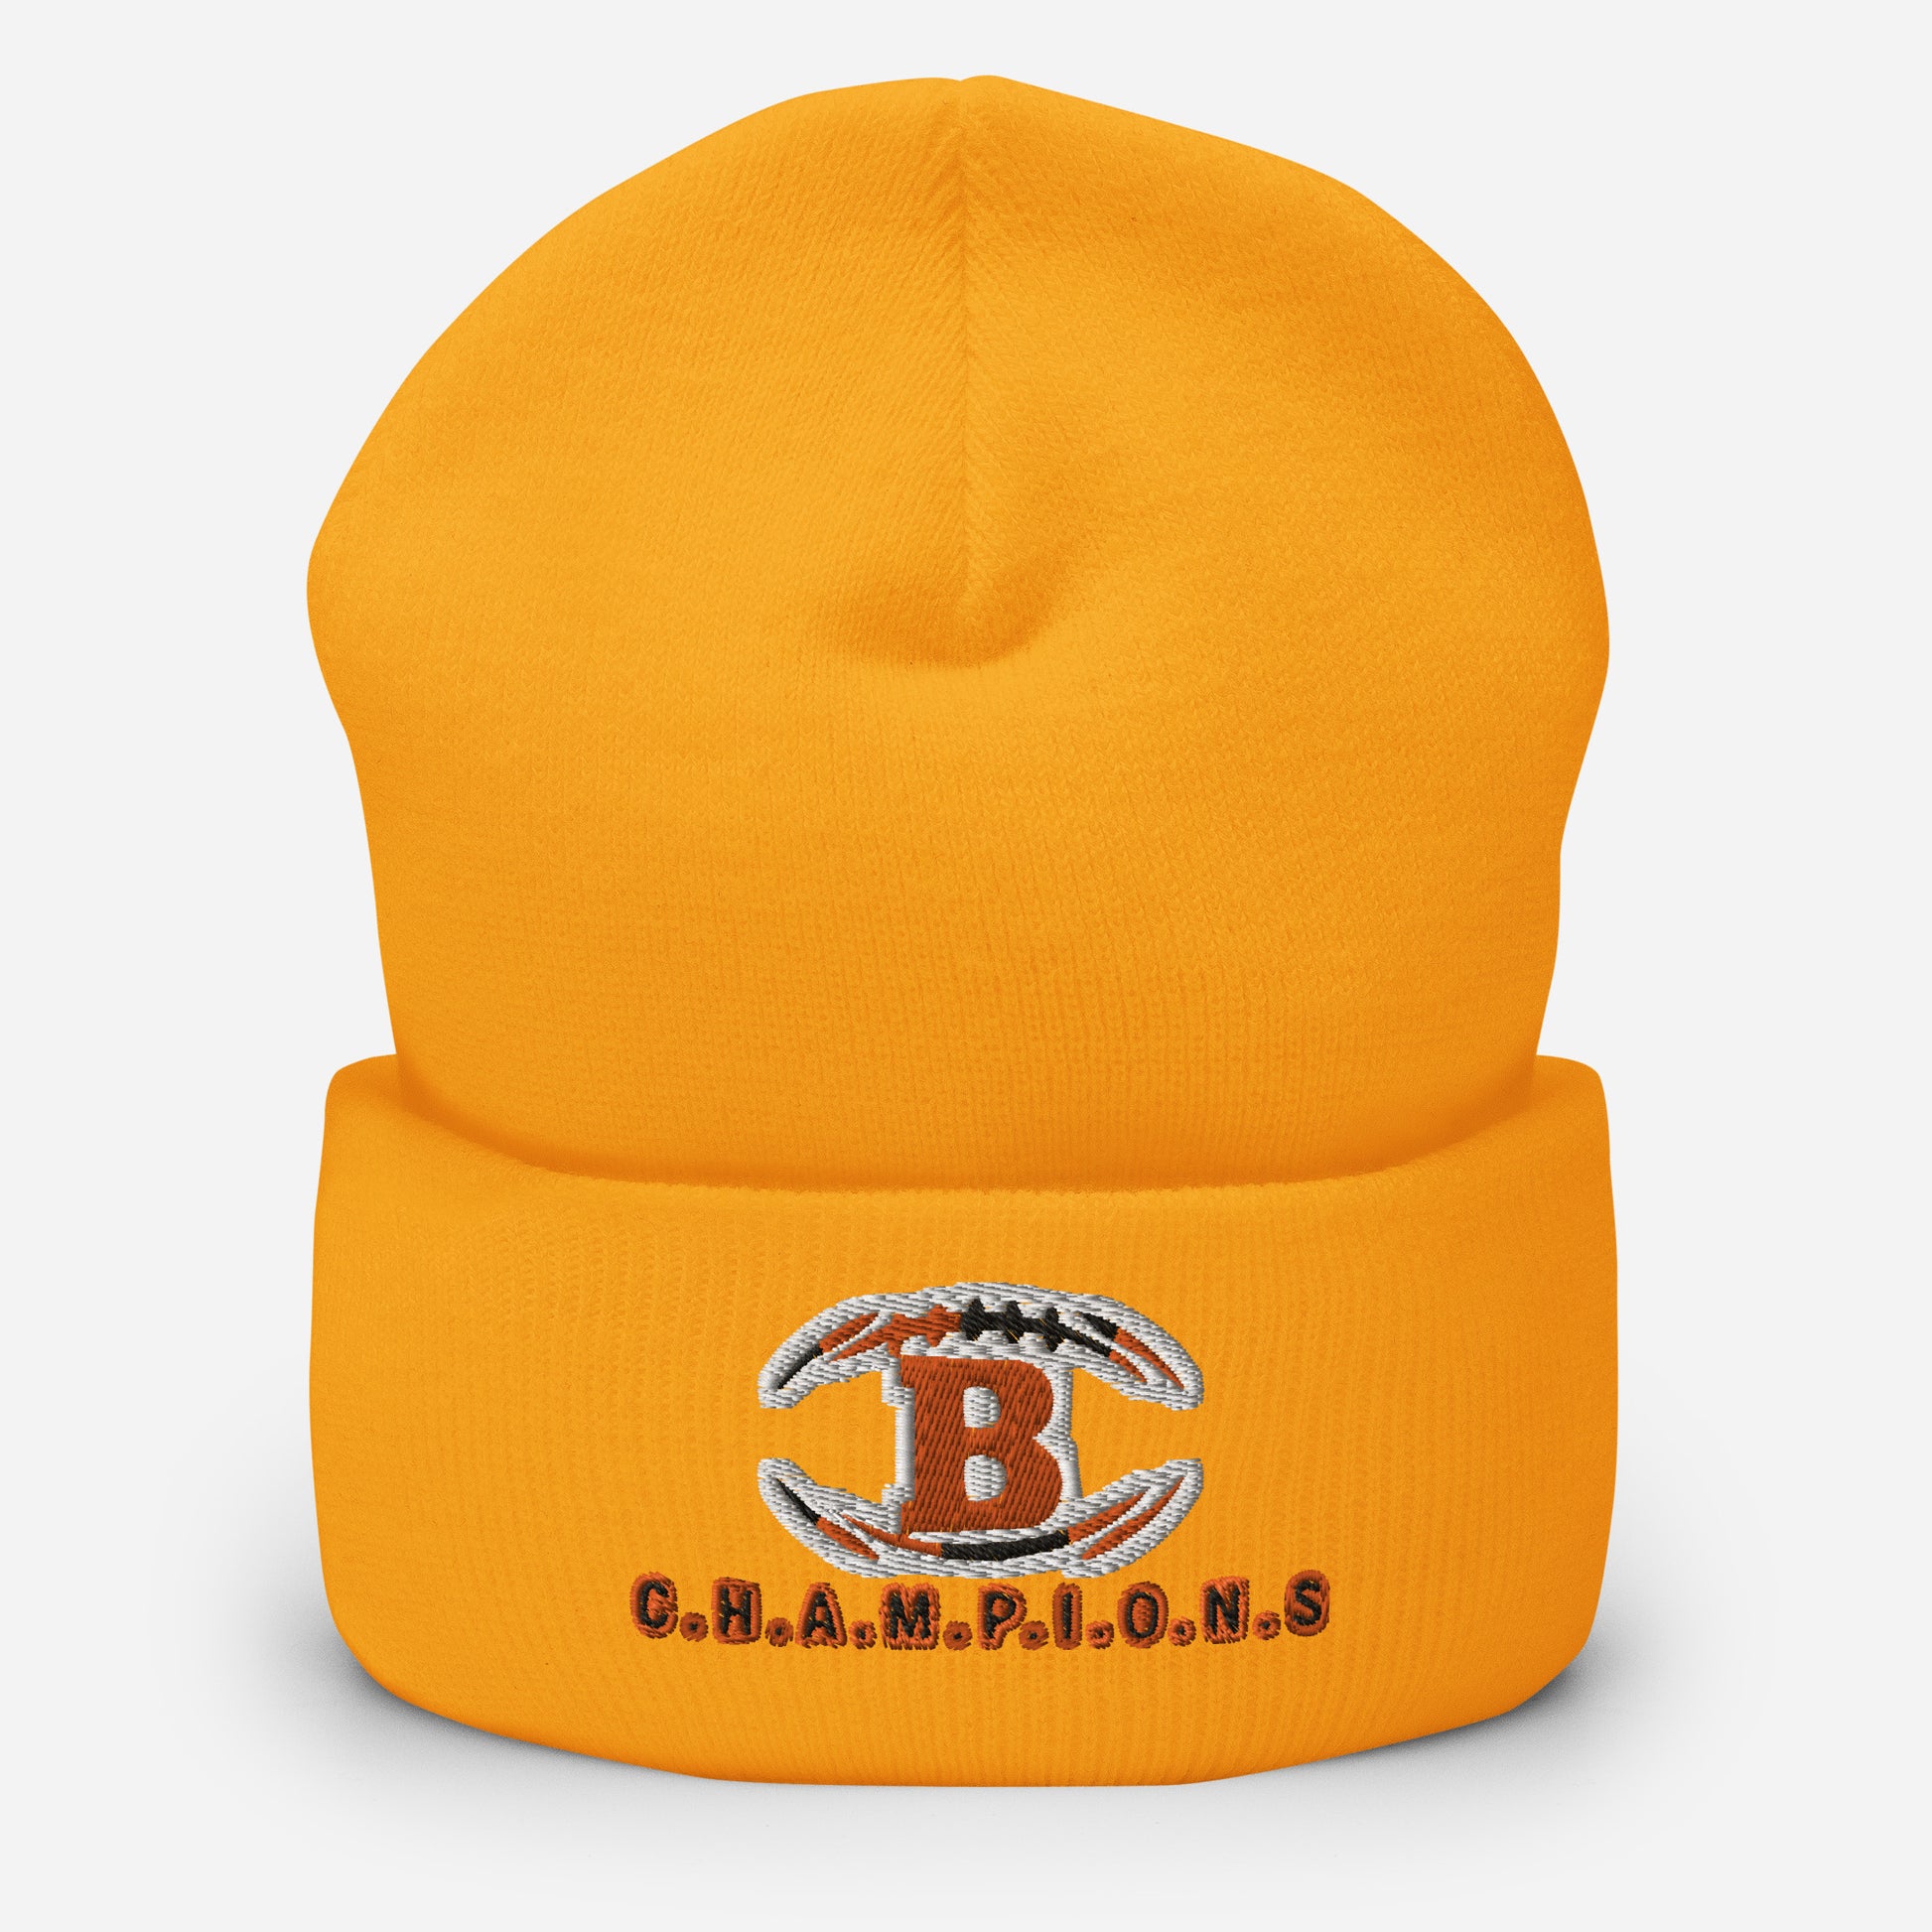 Bengals Champions hat / B hat / Cincinnati Bengals Cuffed Beanie